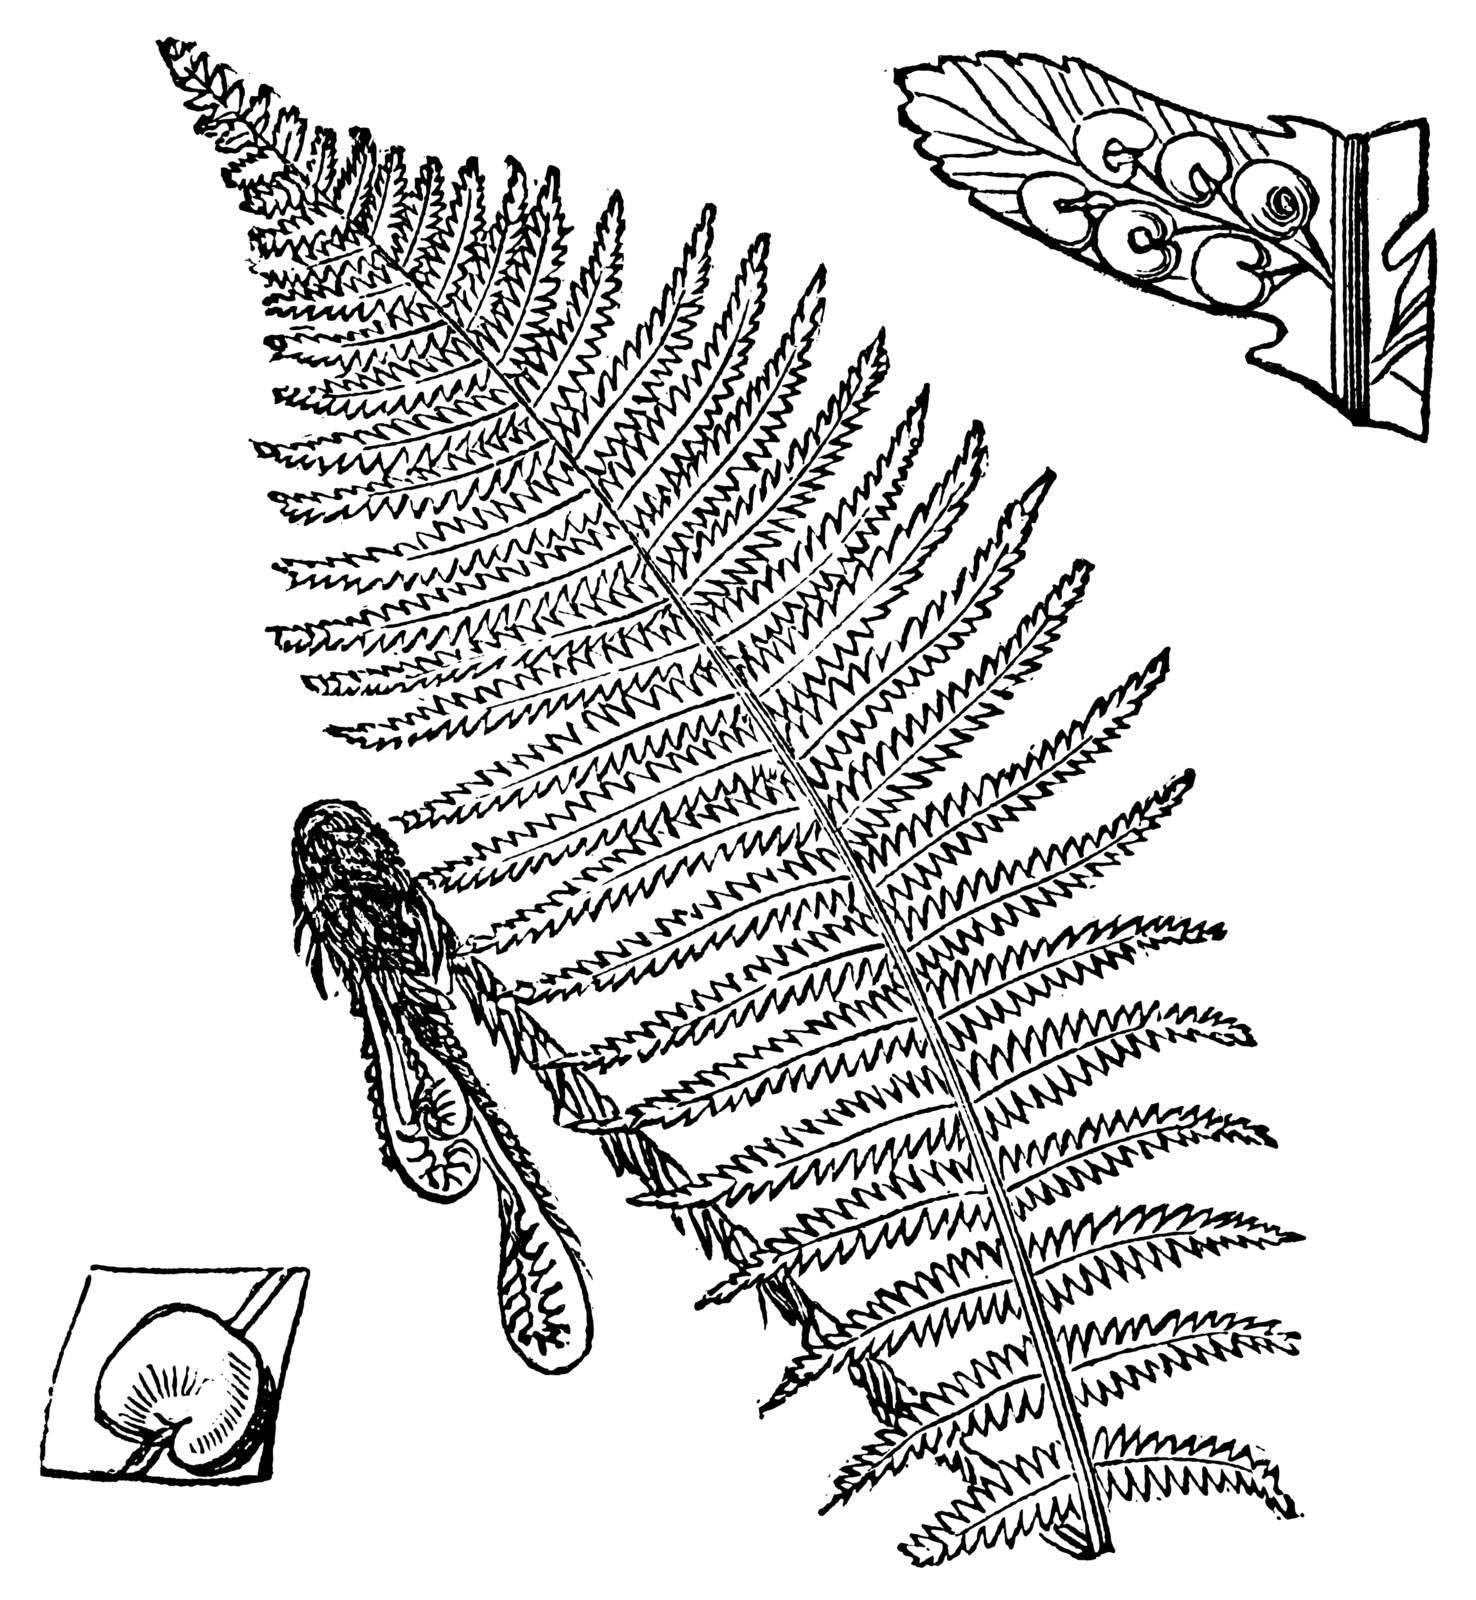 Fern, frond (center) showing spores (lower left and upper right), vintage engraved illustration. Trousset encyclopedia (1886 - 1891).